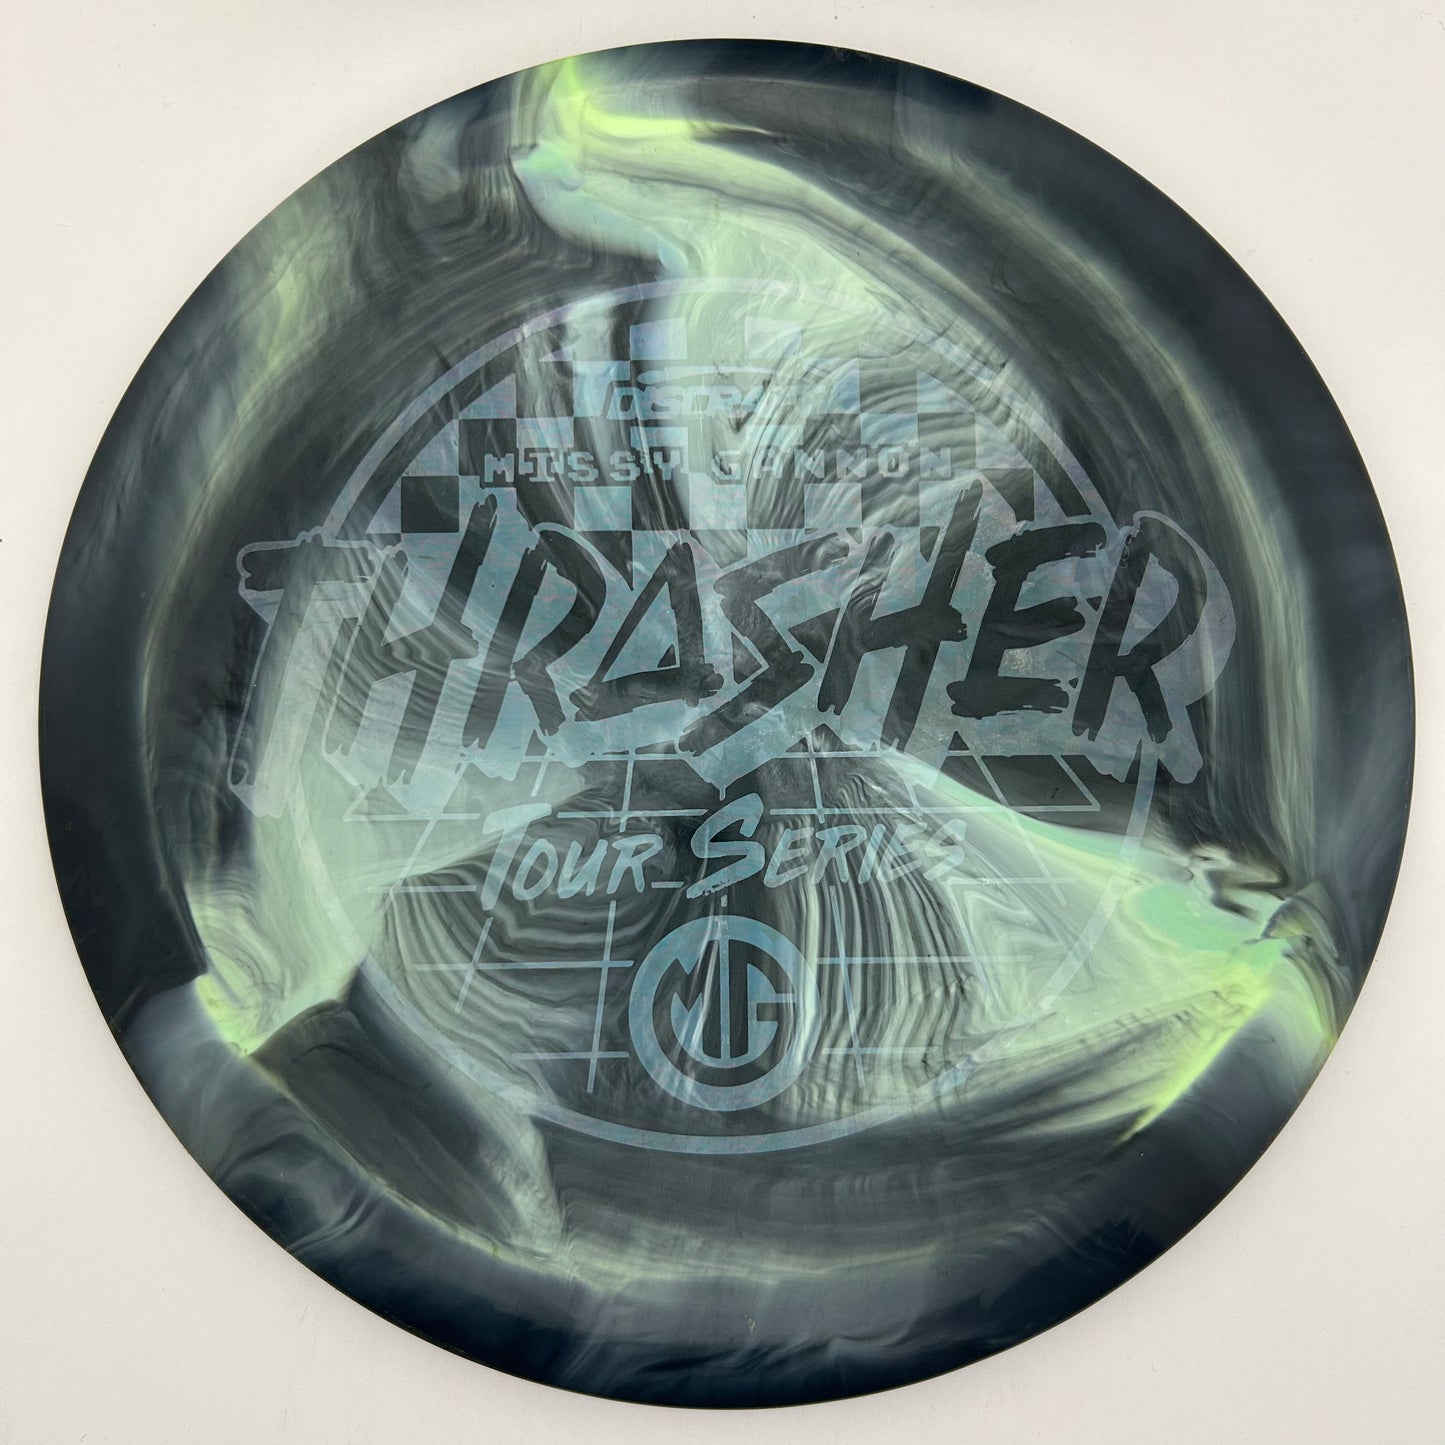 USED - Thrasher